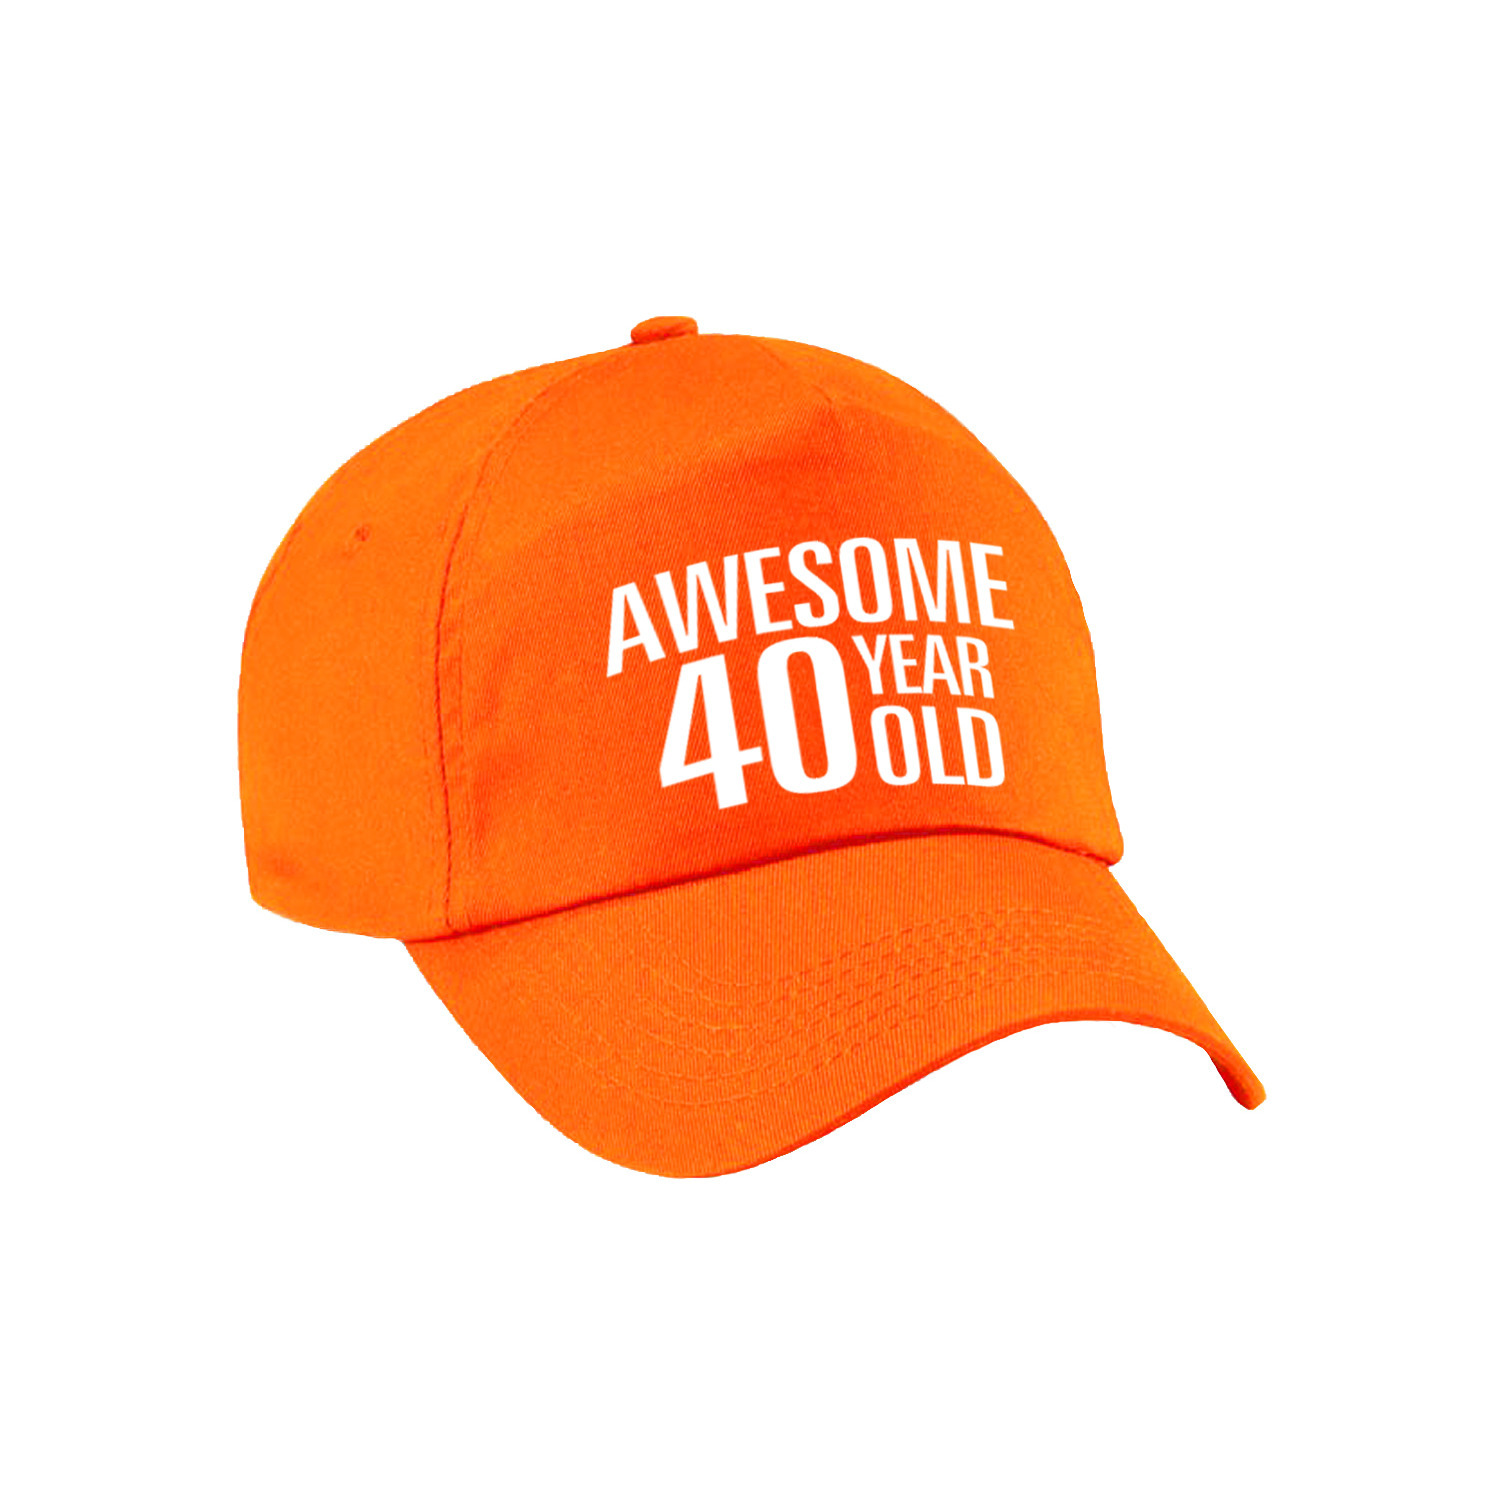 Awesome 40 year old verjaardag pet / cap oranje voor dames en heren